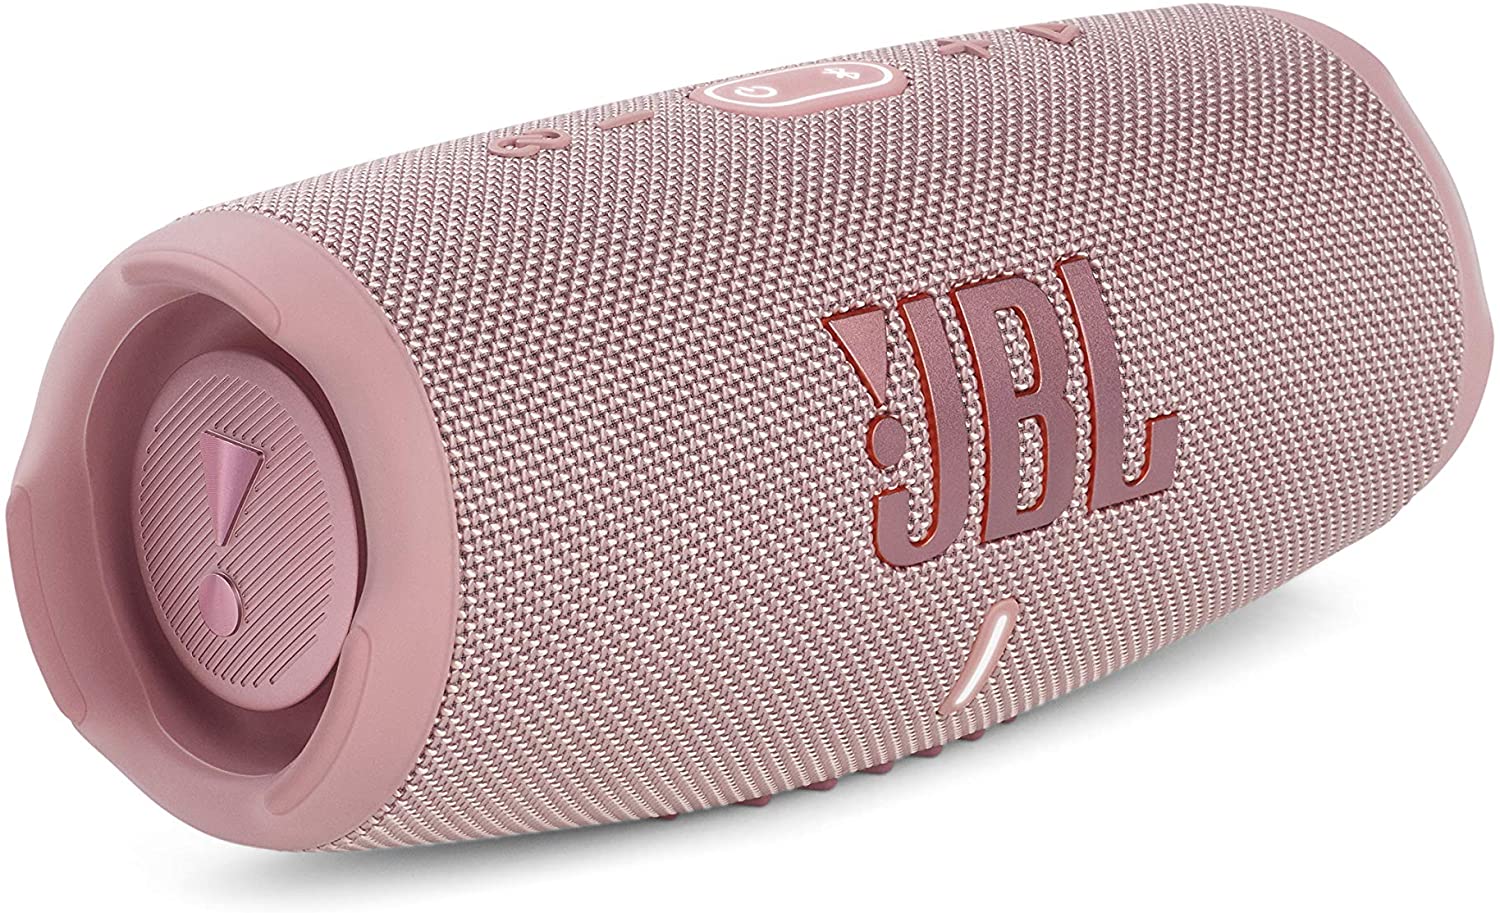 JBL Charge 5 - Portable Bluetooth Speaker with deep bass, IP67 waterproof and dustproof, 20 hours of playtime, built-in powerbank, in pink